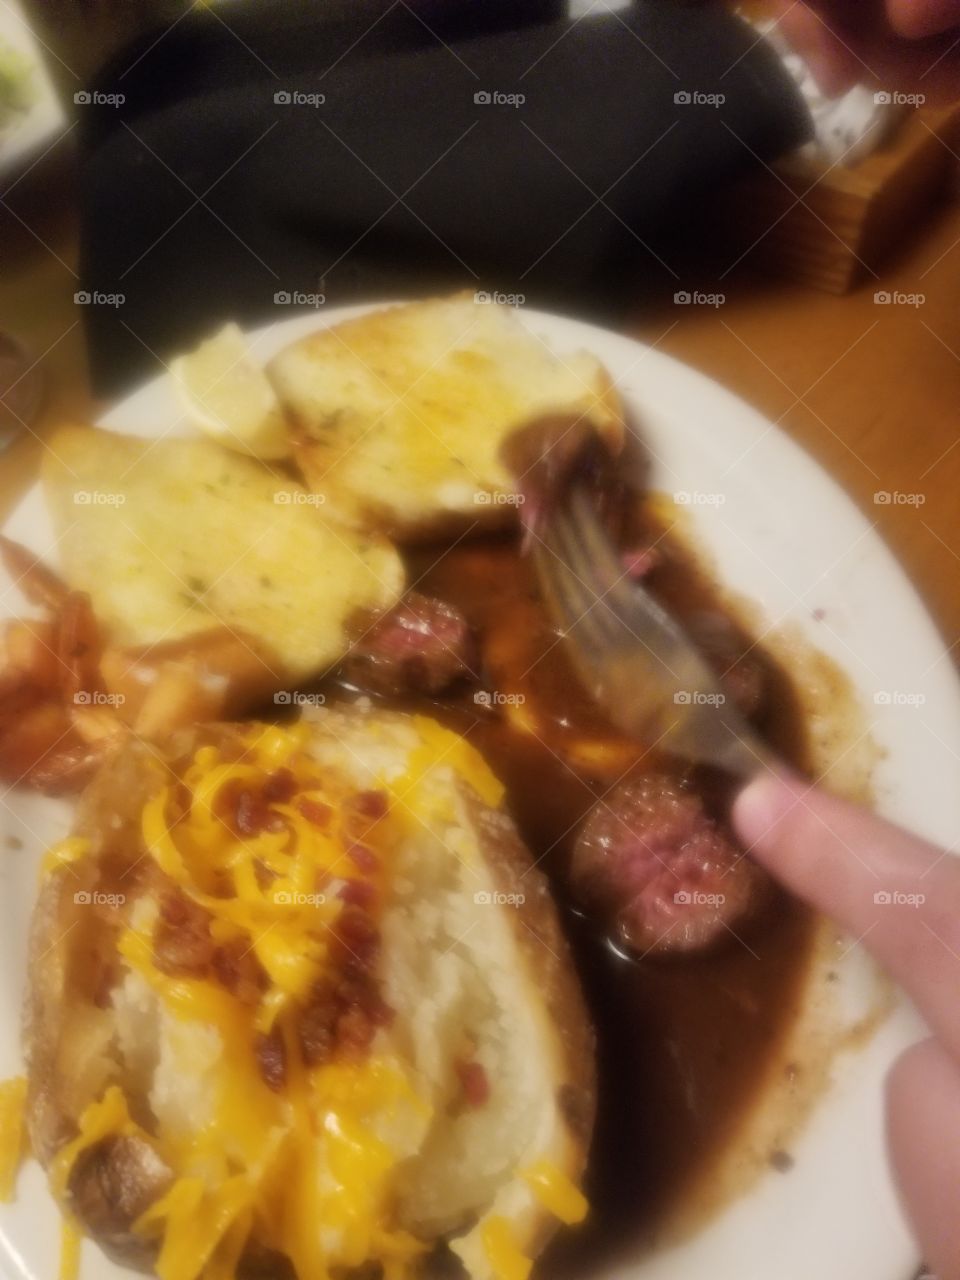 Steak and mashed potatoes